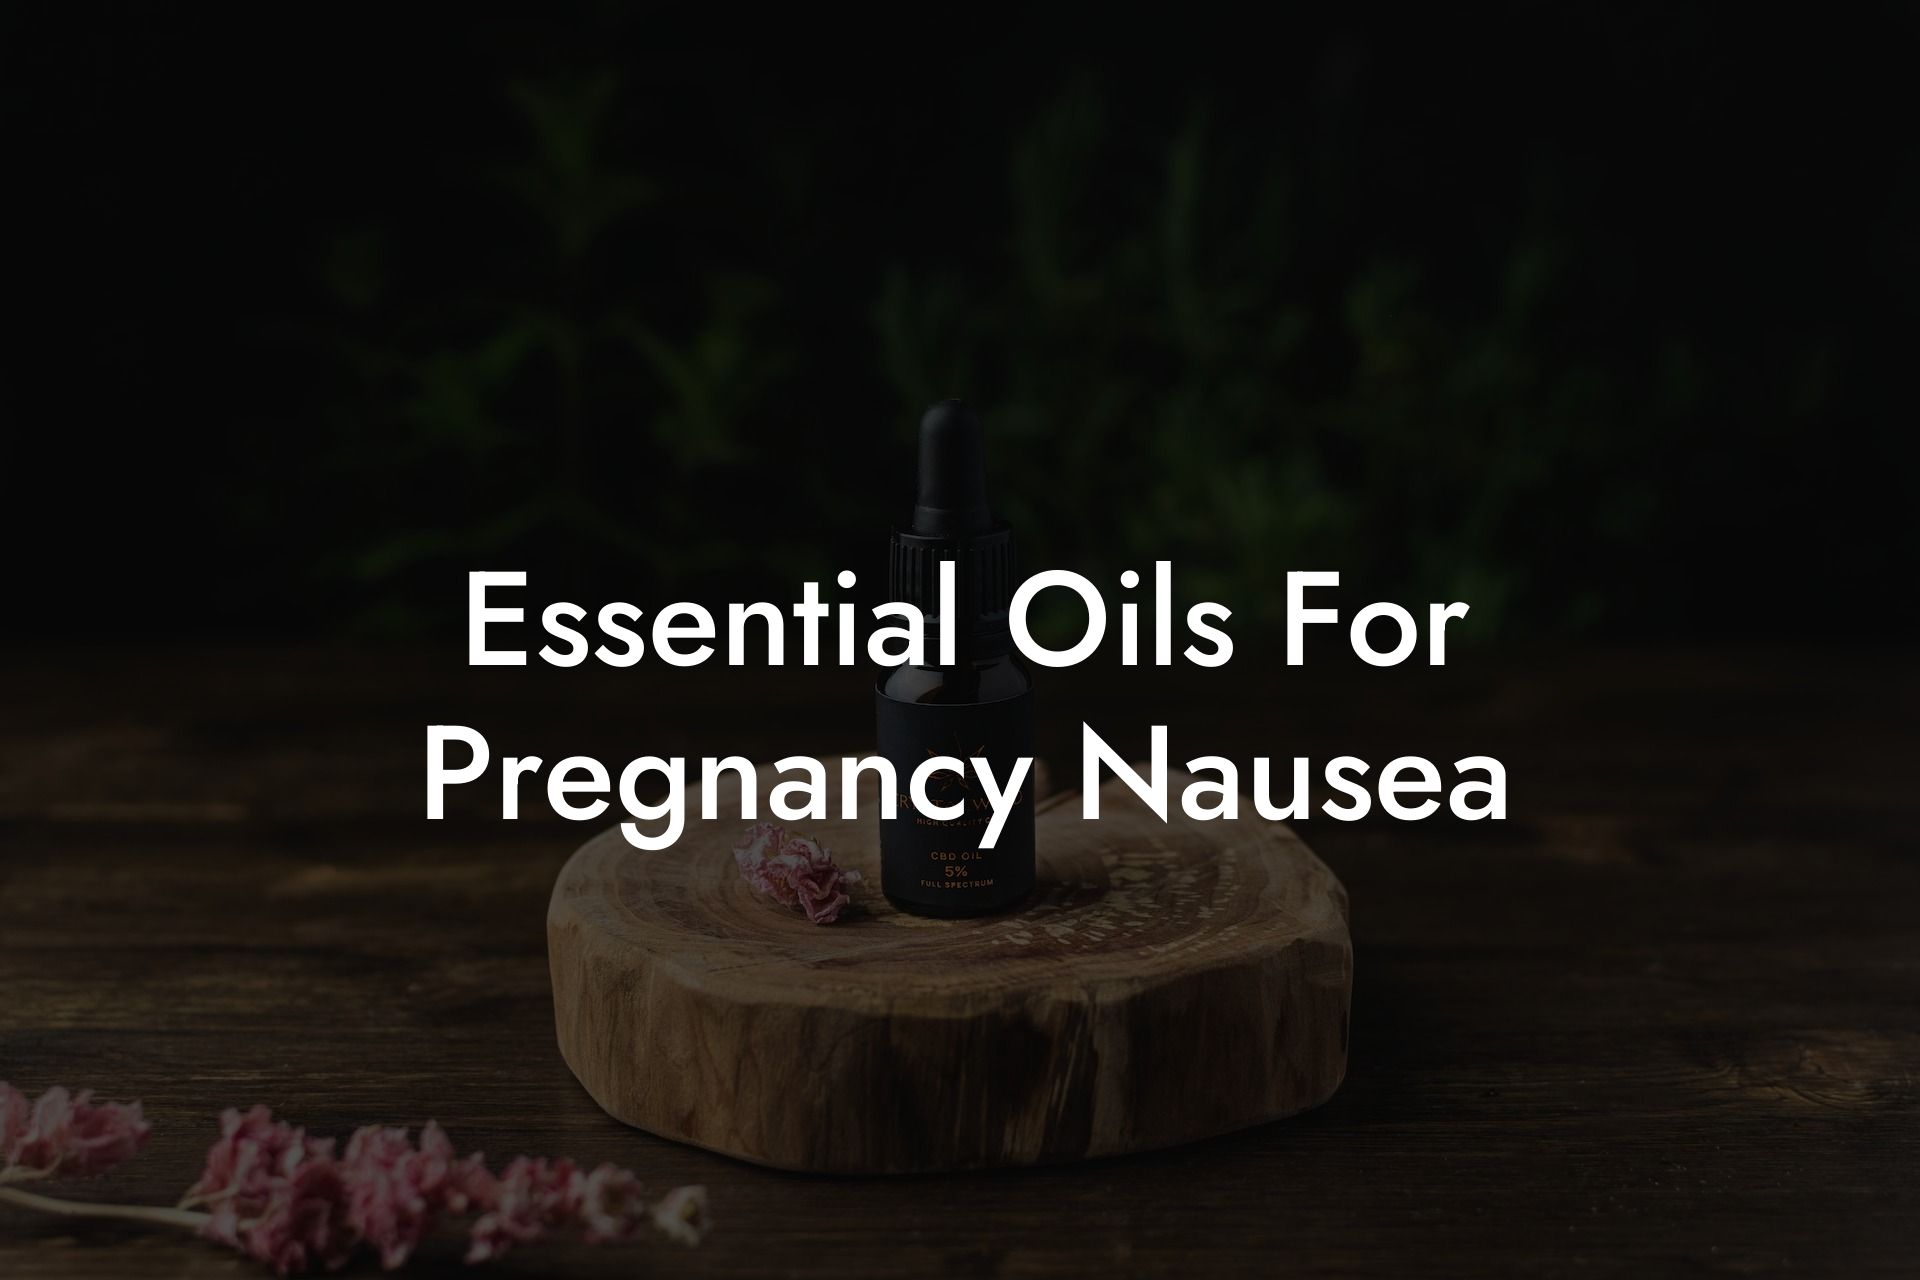 Essential Oils For Pregnancy Nausea